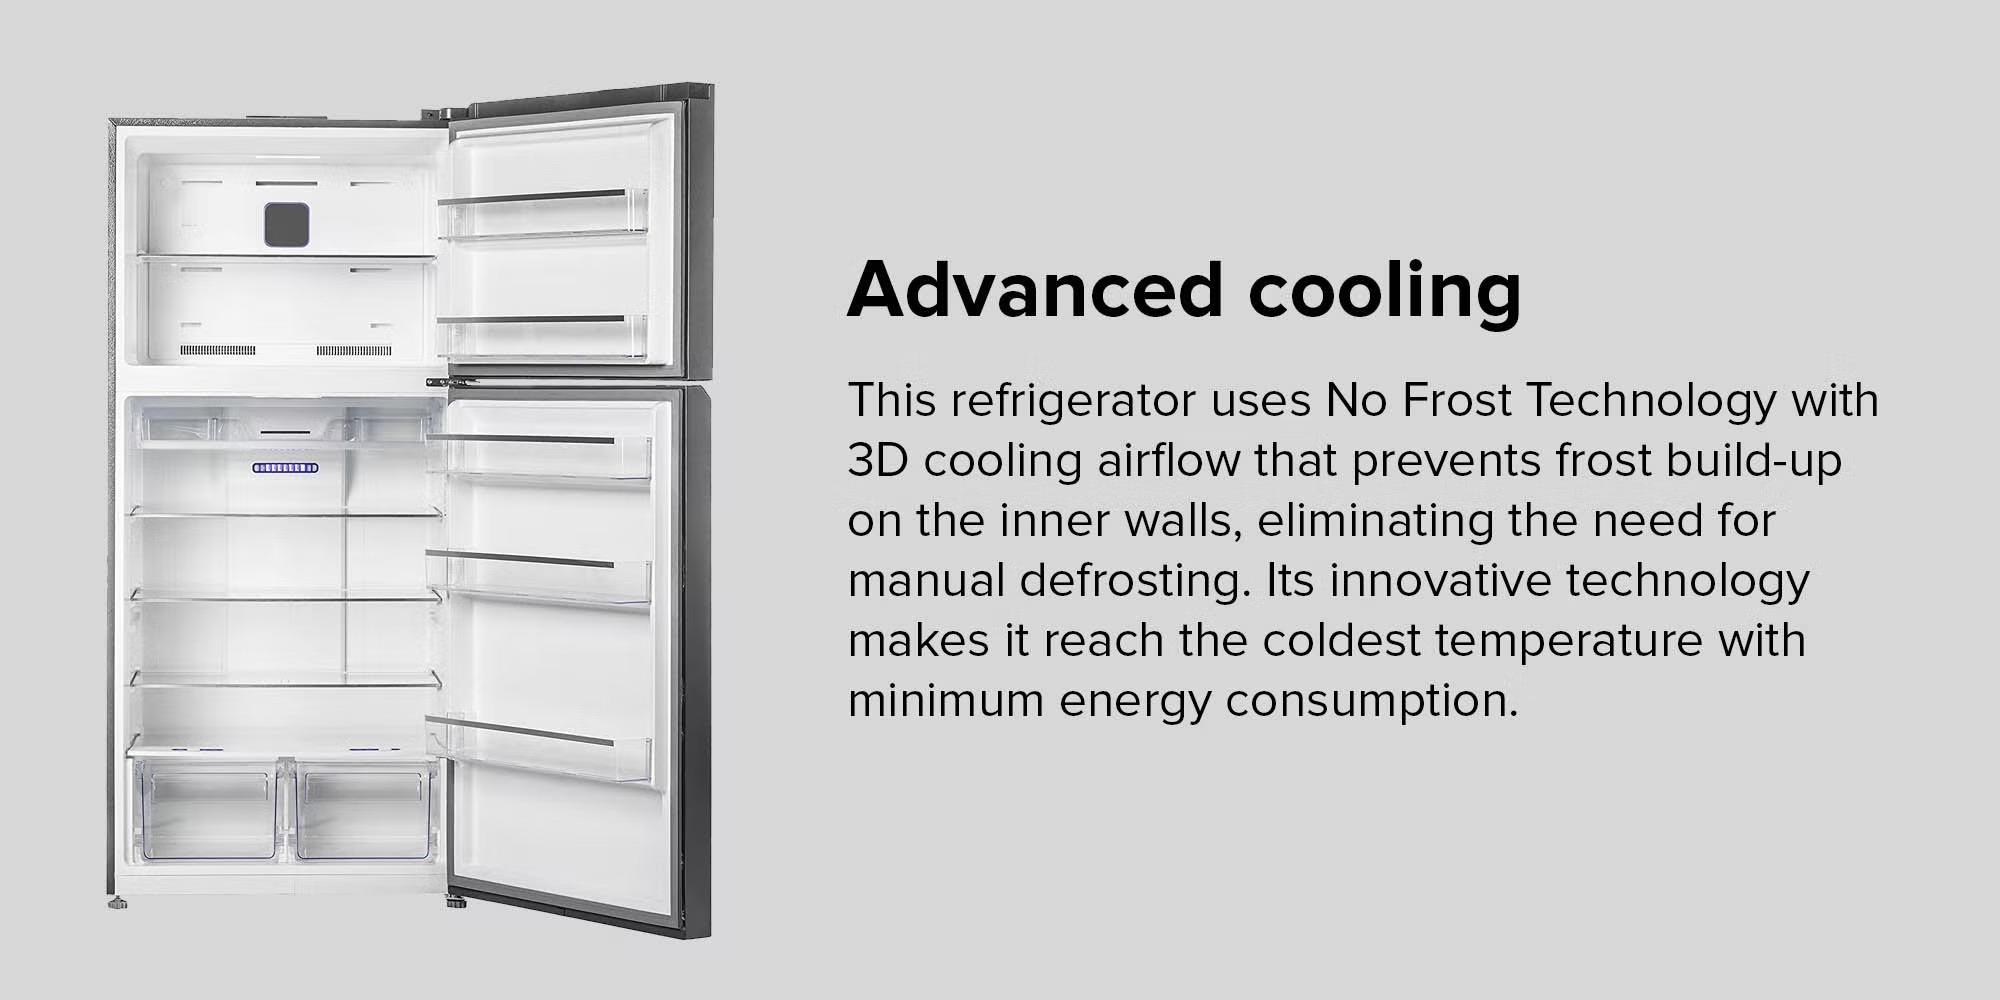 Terim TERR600SST |  Top Freezer Refrigerator 